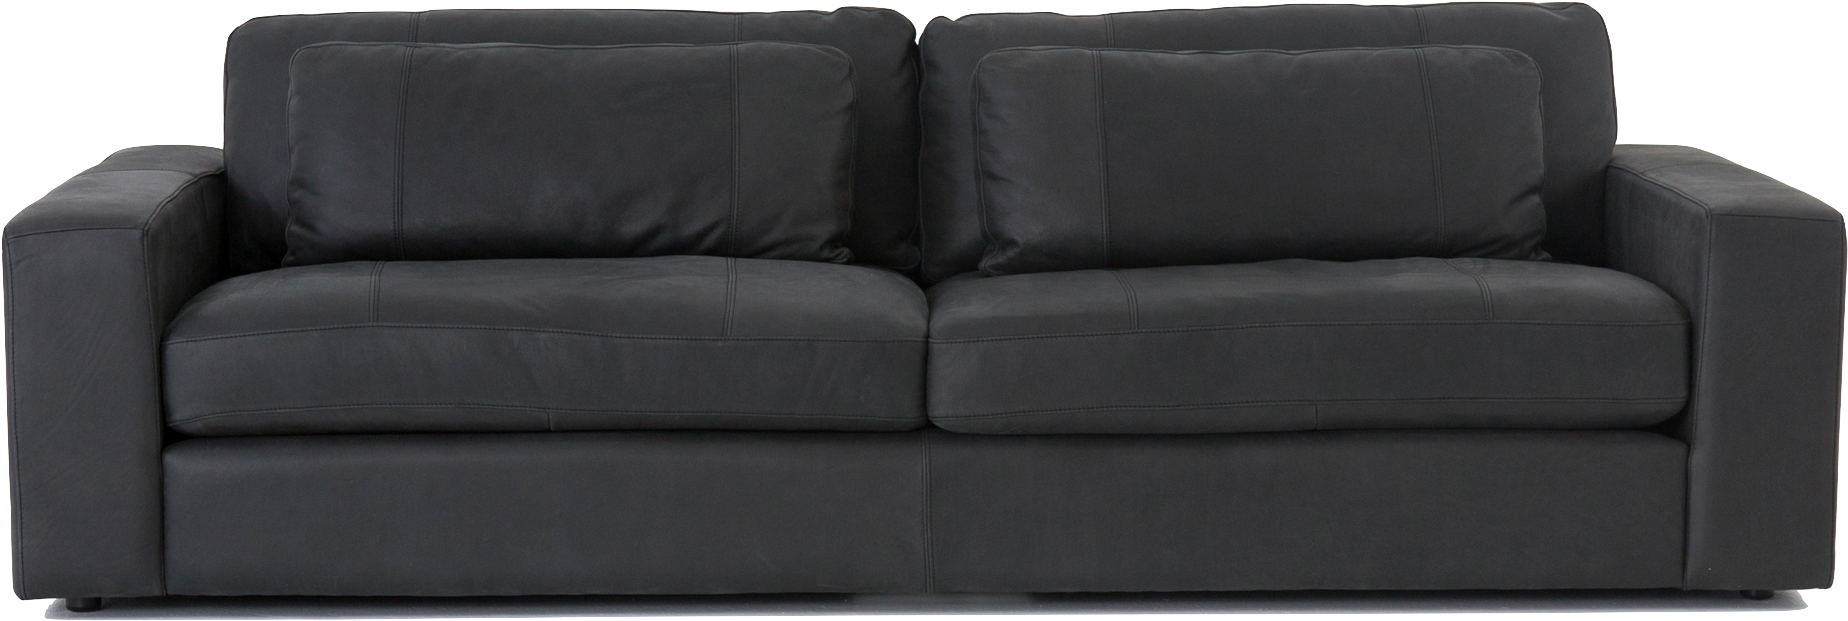 Modern Black Leather Sofa PNG